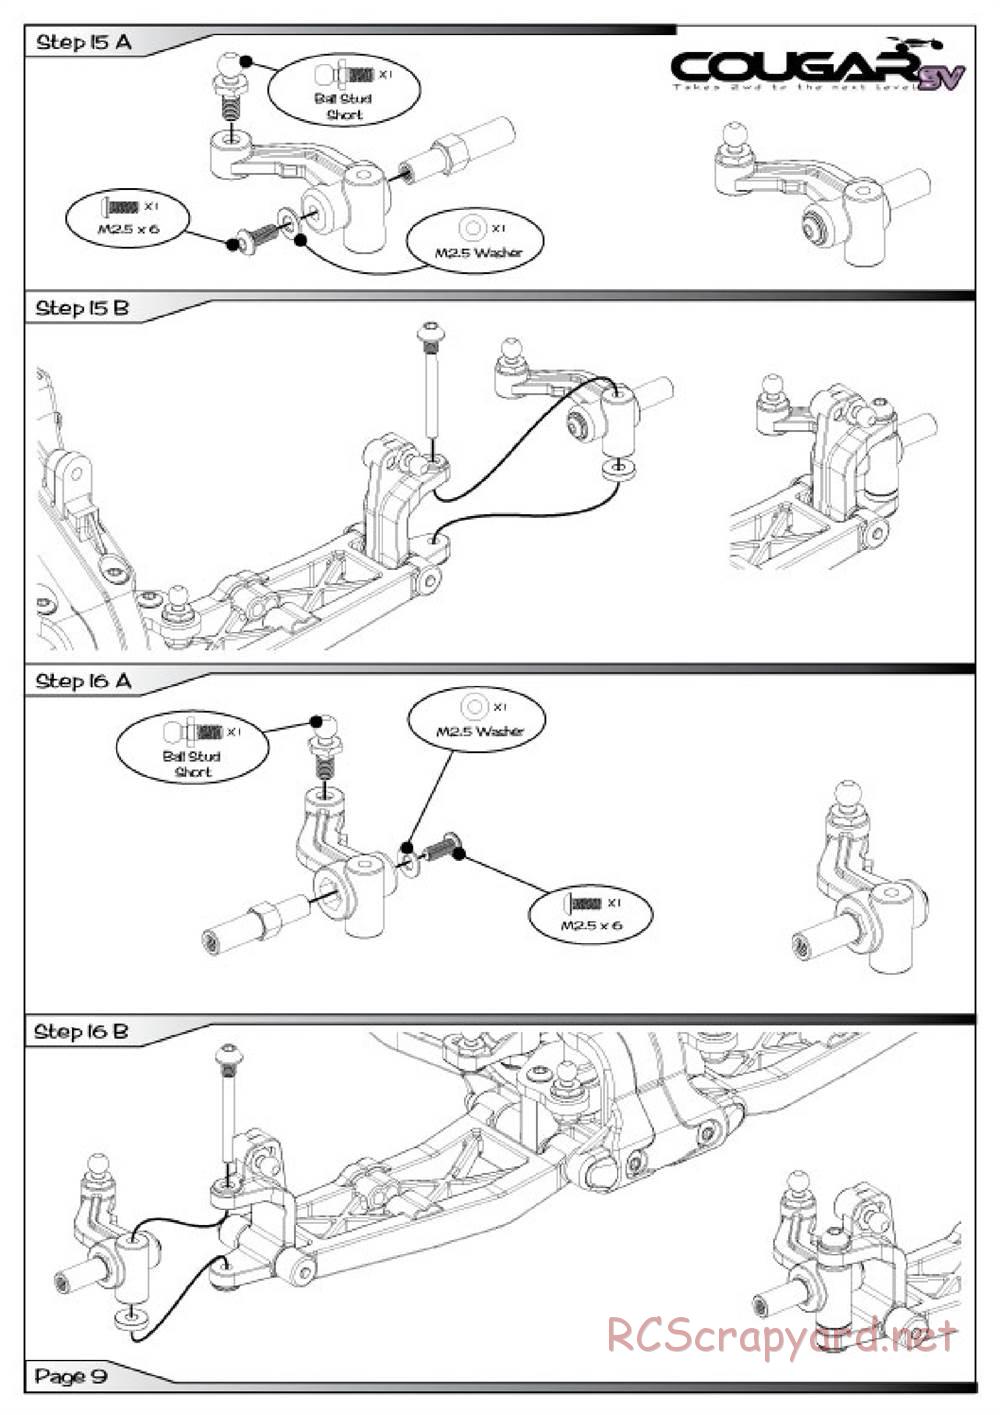 Schumacher - Cougar SV - Manual - Page 10